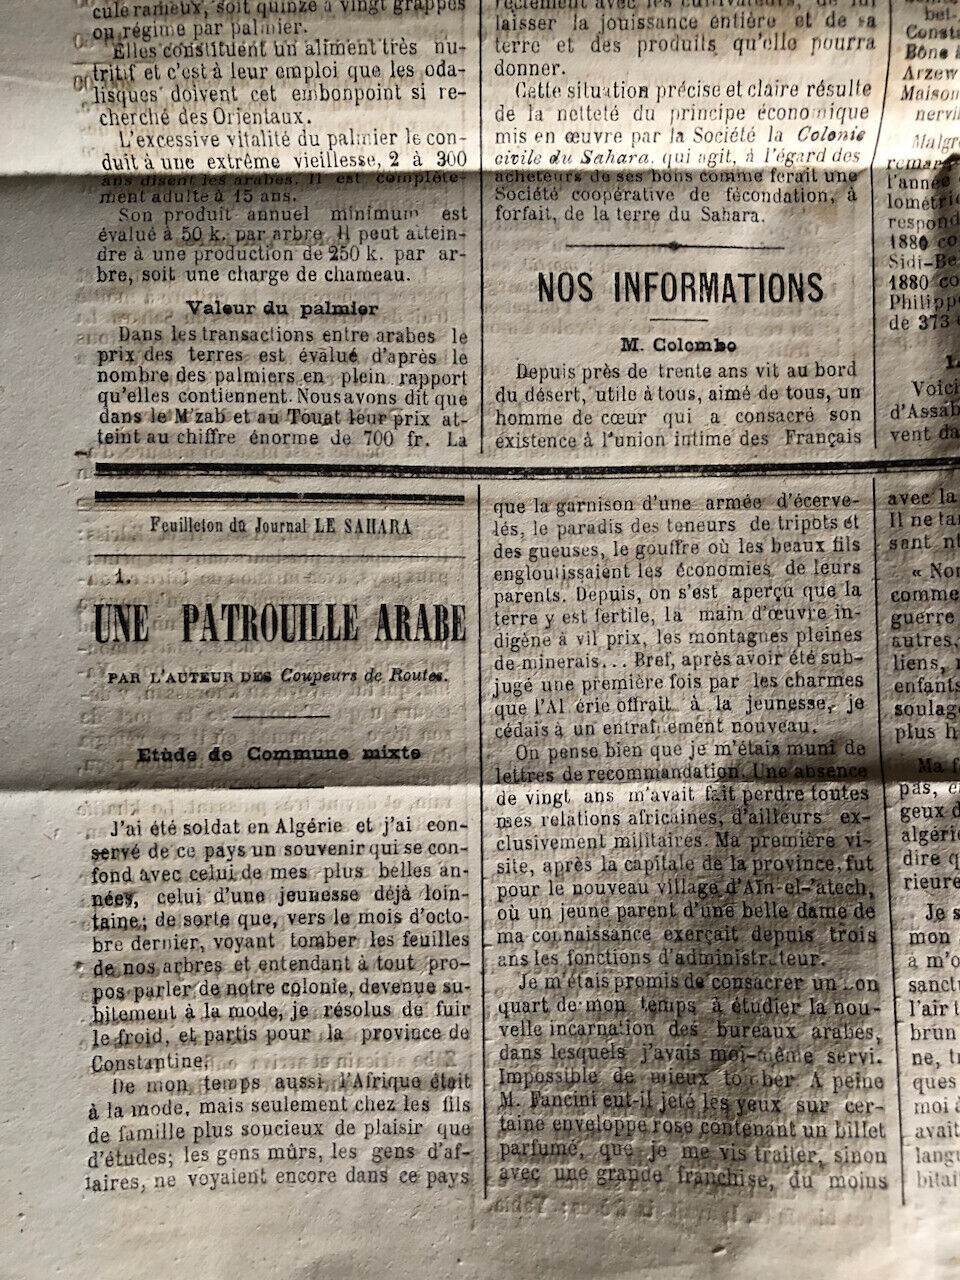 Bimensuel Le Sahara - organe de la France africaine — colonies — n° 2 — 1880.